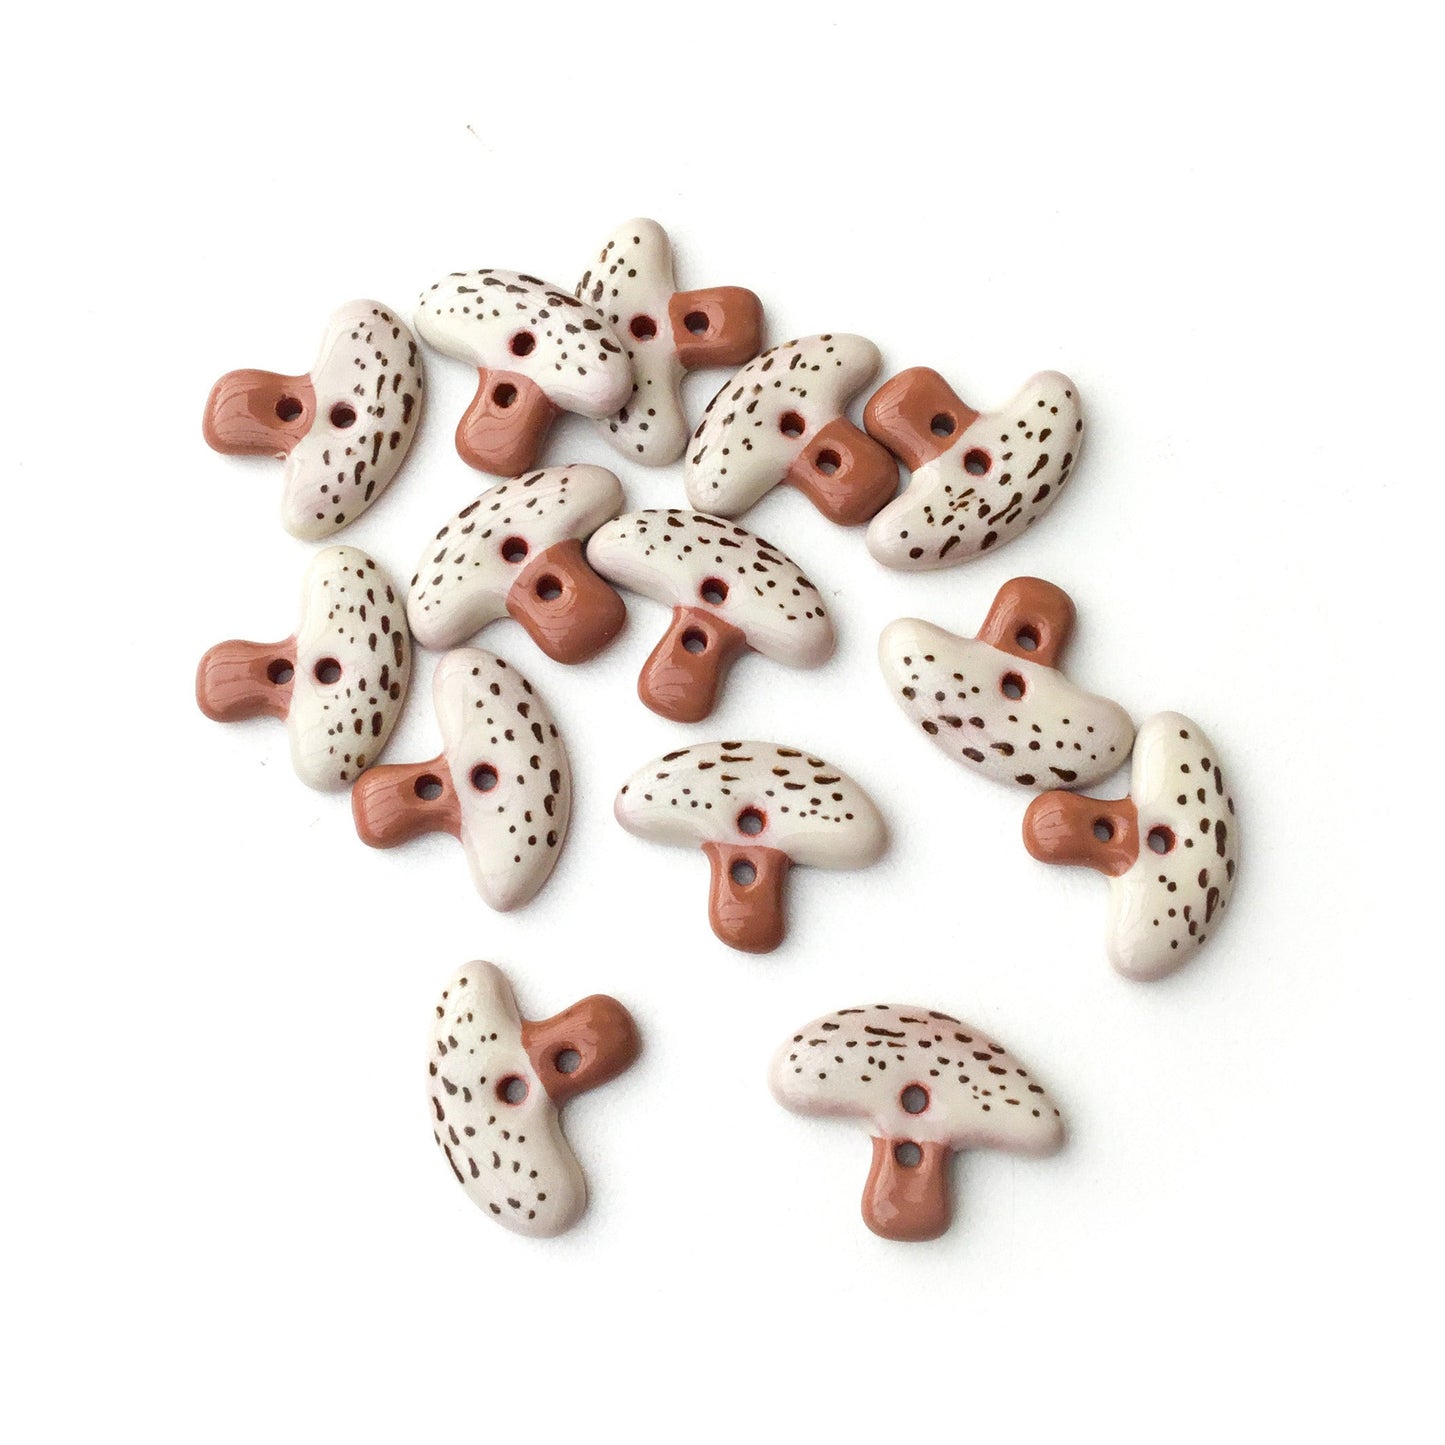 Brown Parasol Mushroom Buttons - 5/8" x 7/8"